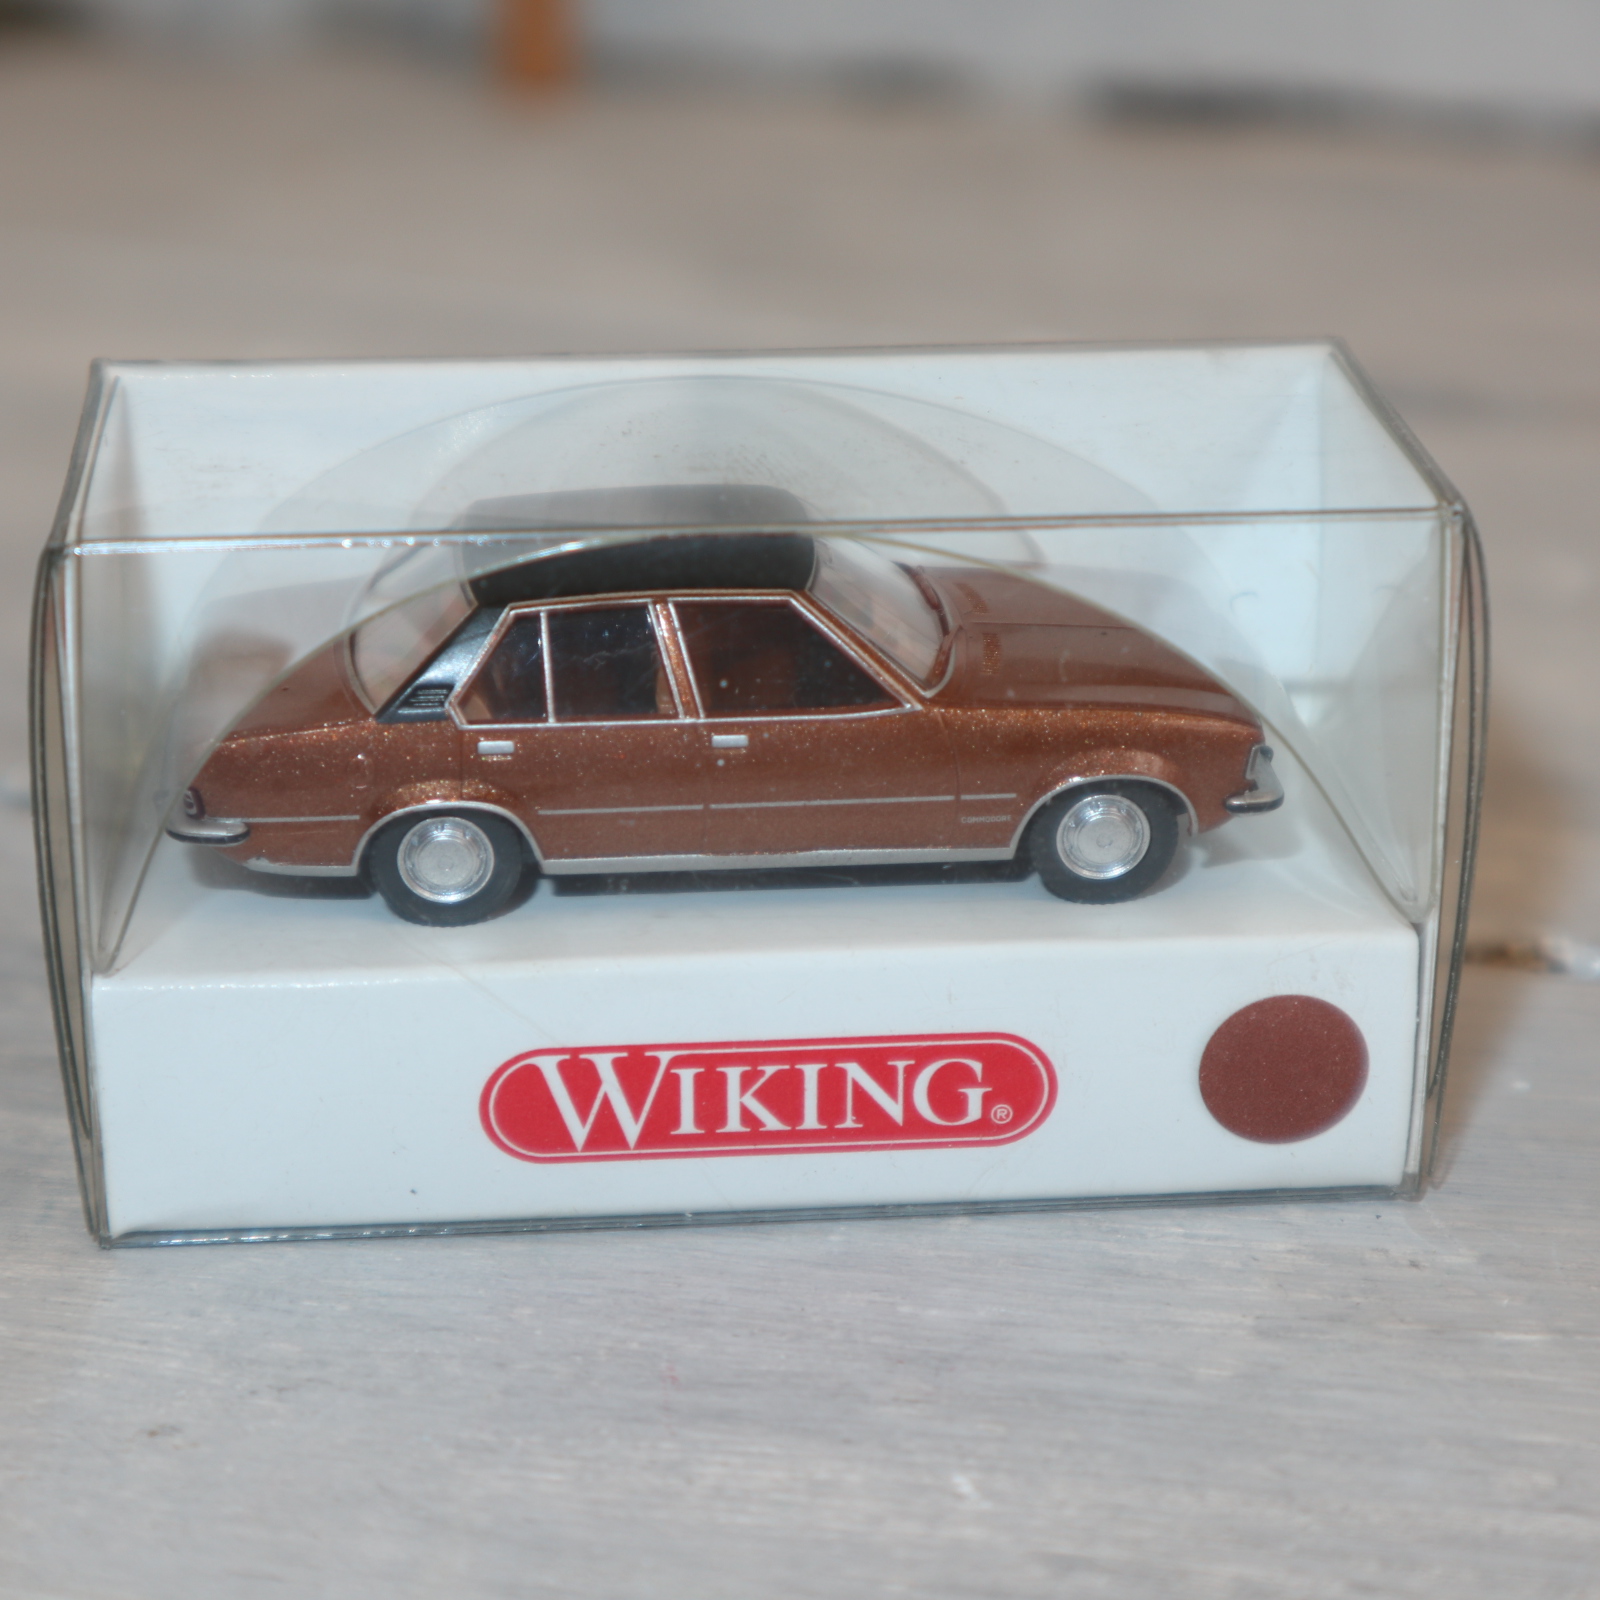 Wiking 07960128 in 1:87 Opel Commodore in goldmetallic mit schwarzem Dach, NEU in OVP